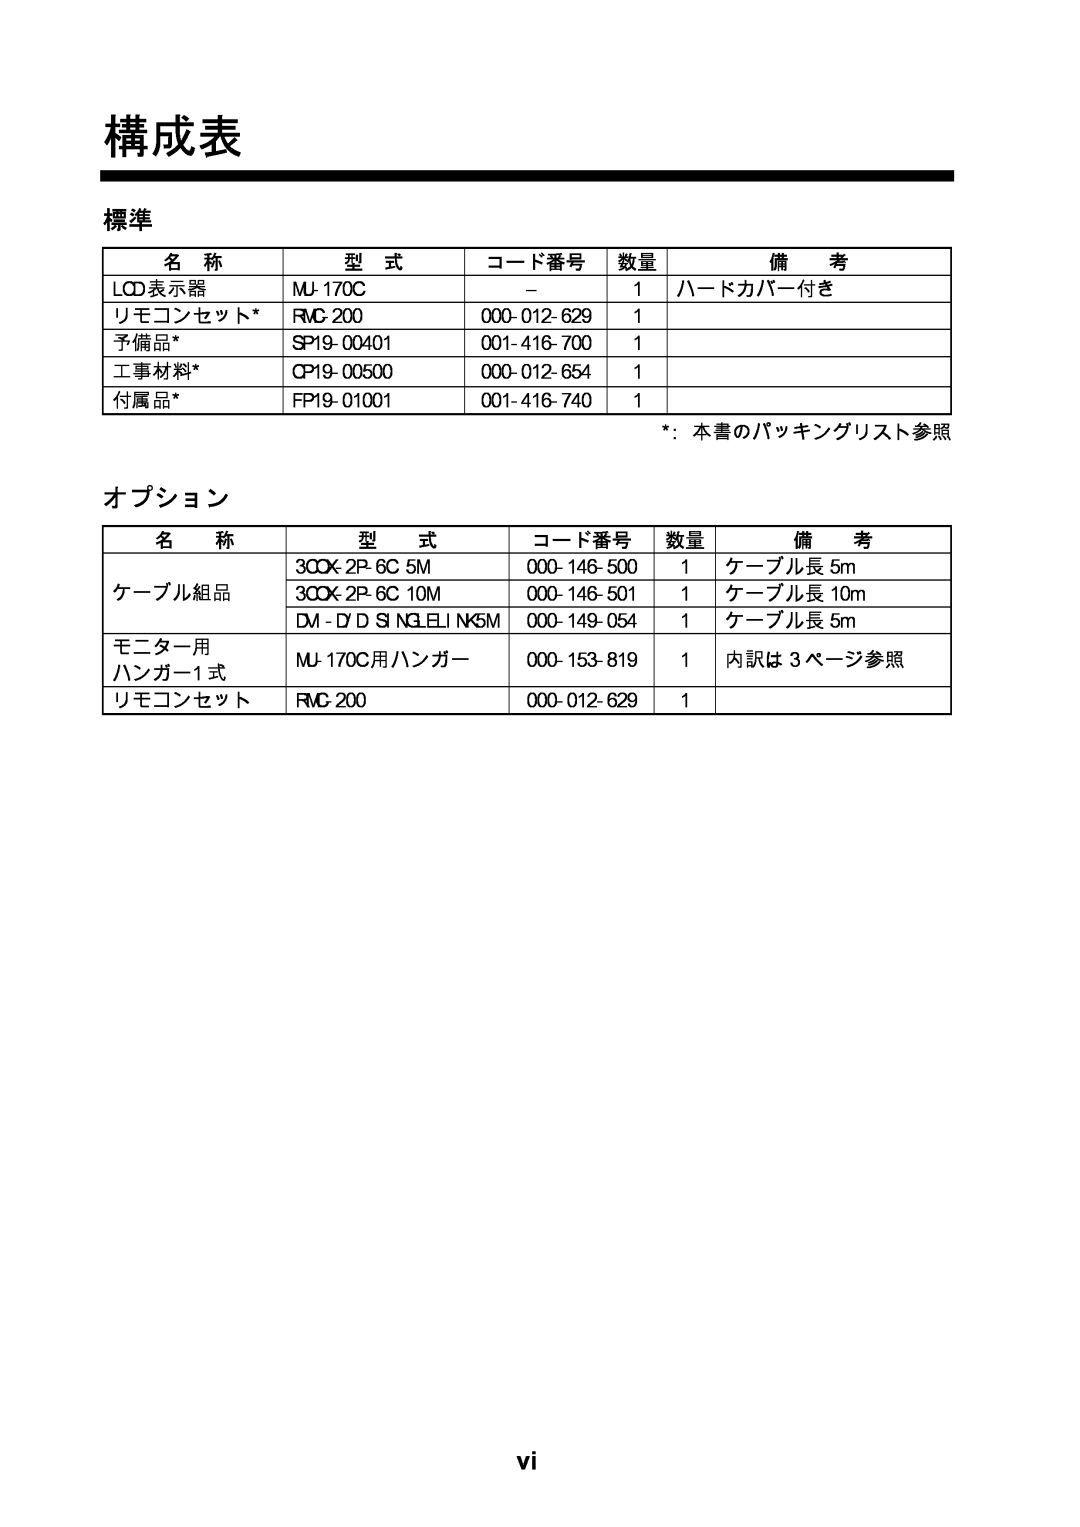 Furuno MU-170C manual オプション 